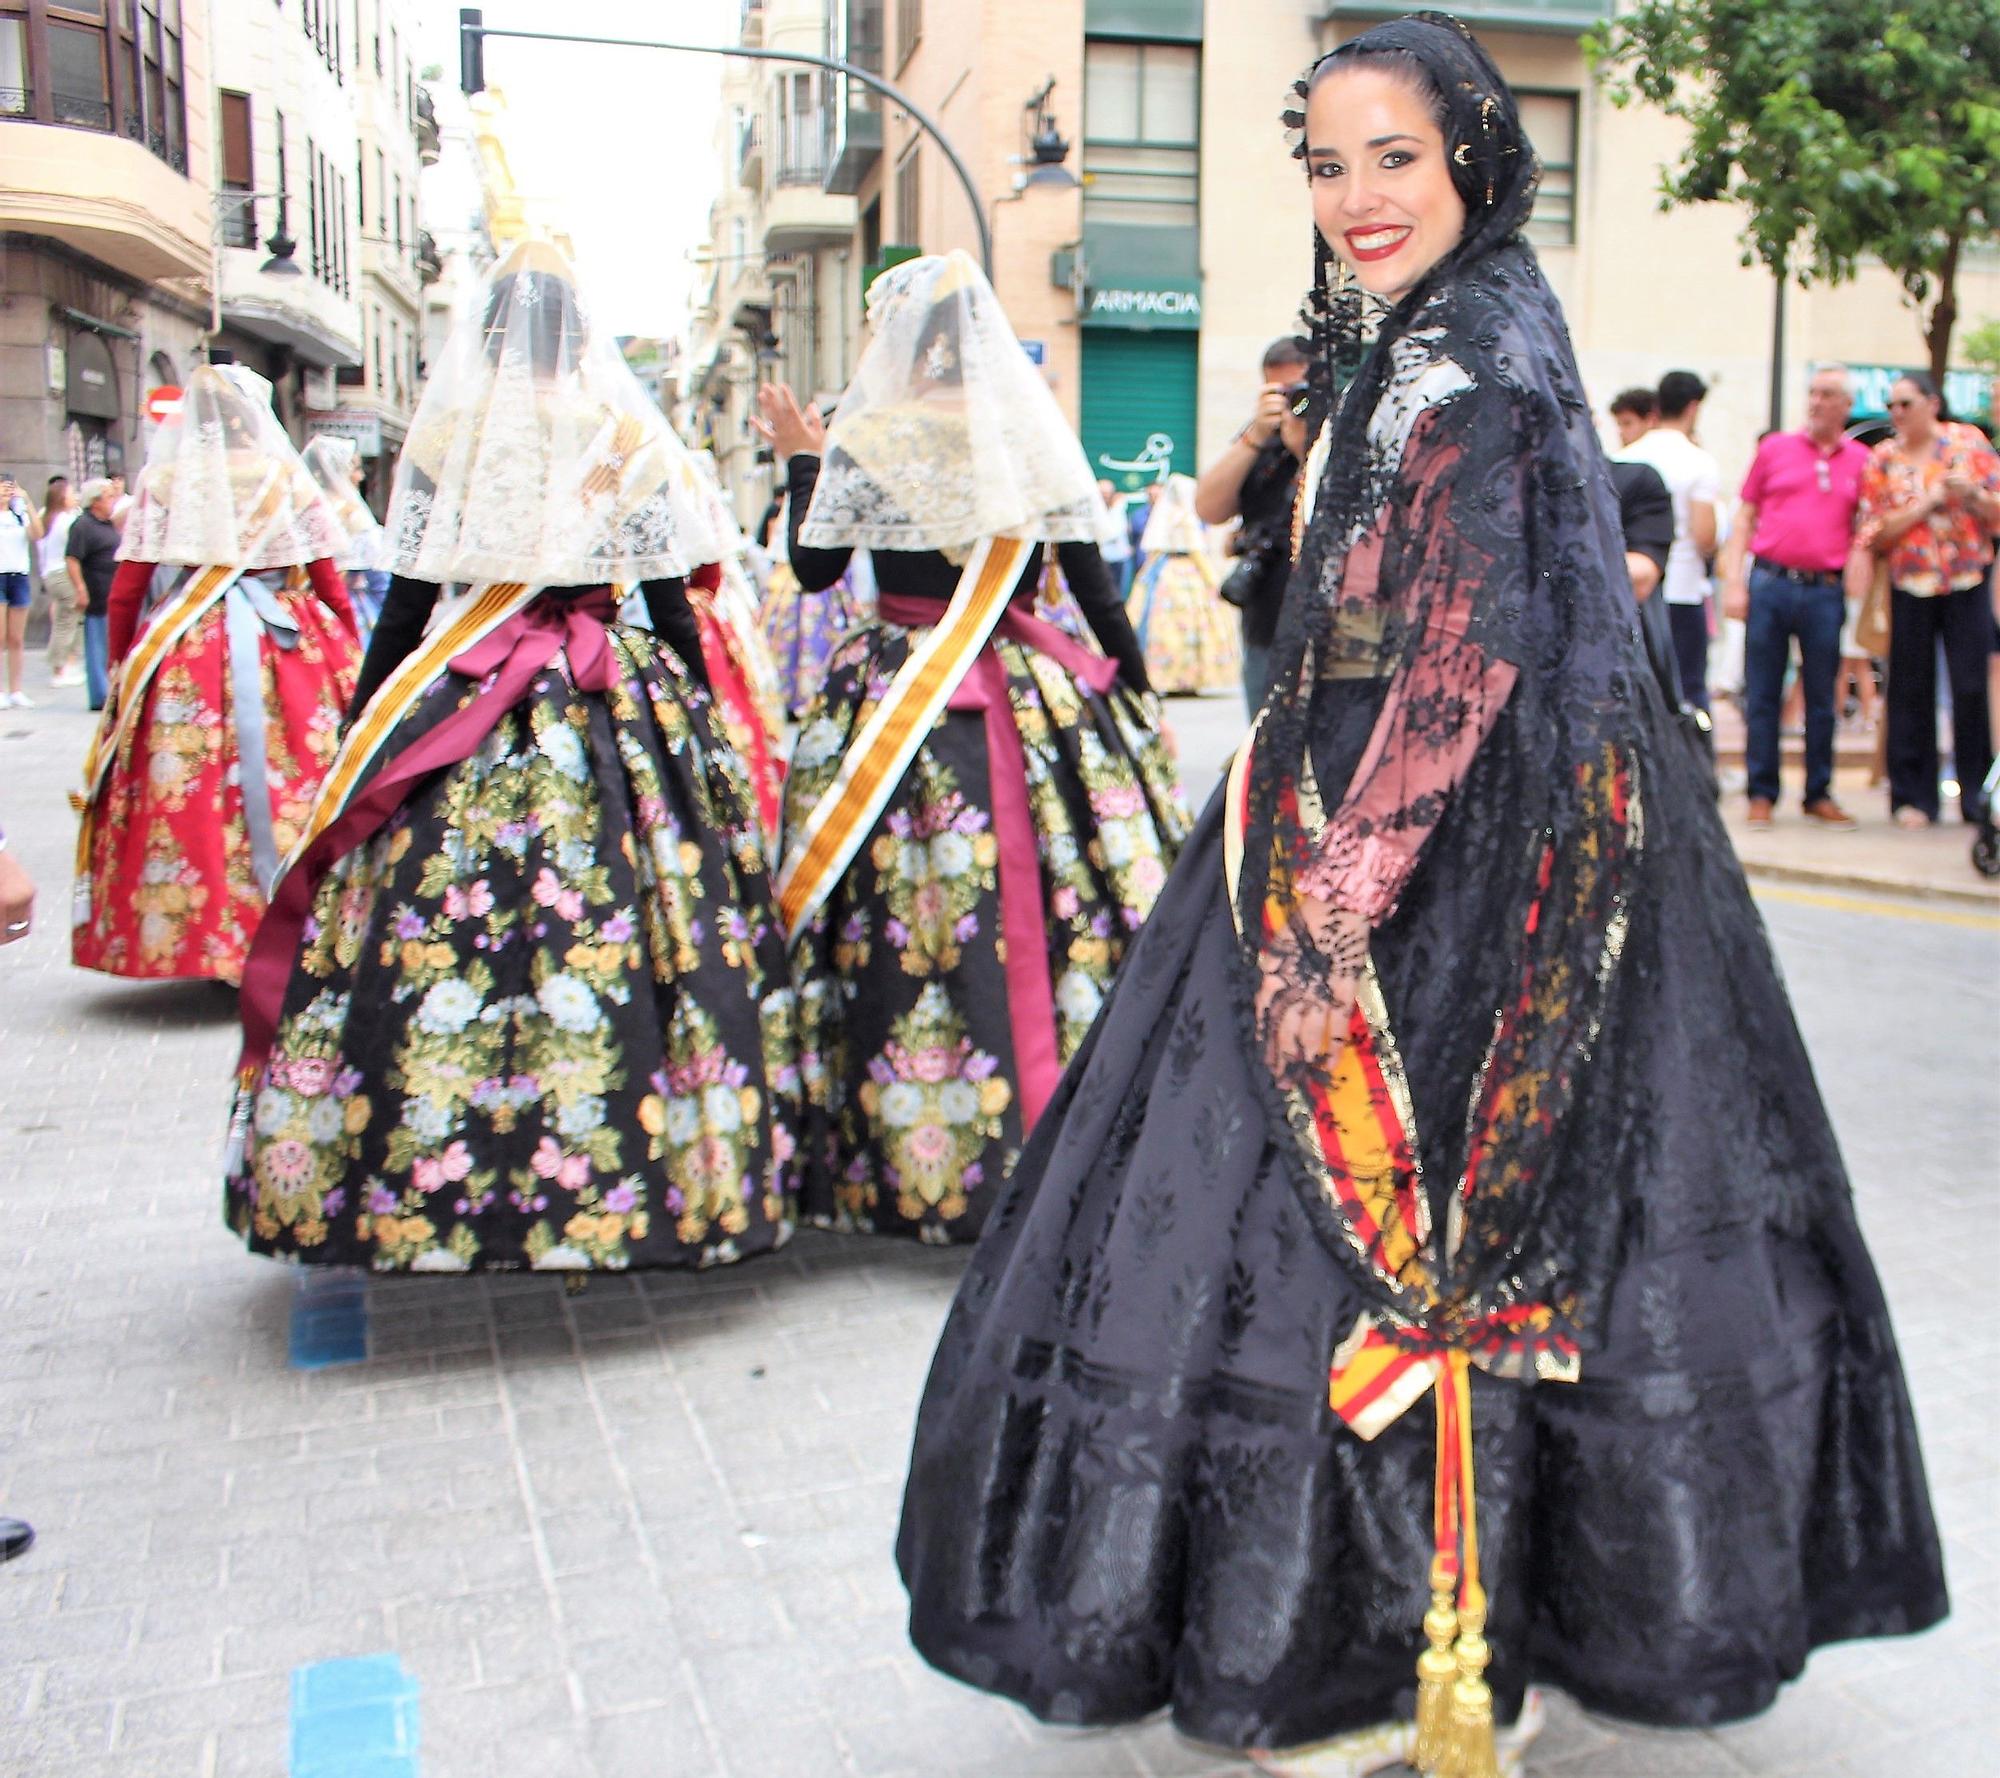 Indumentaria tradicional: la basquiña negra de Carmen Martín